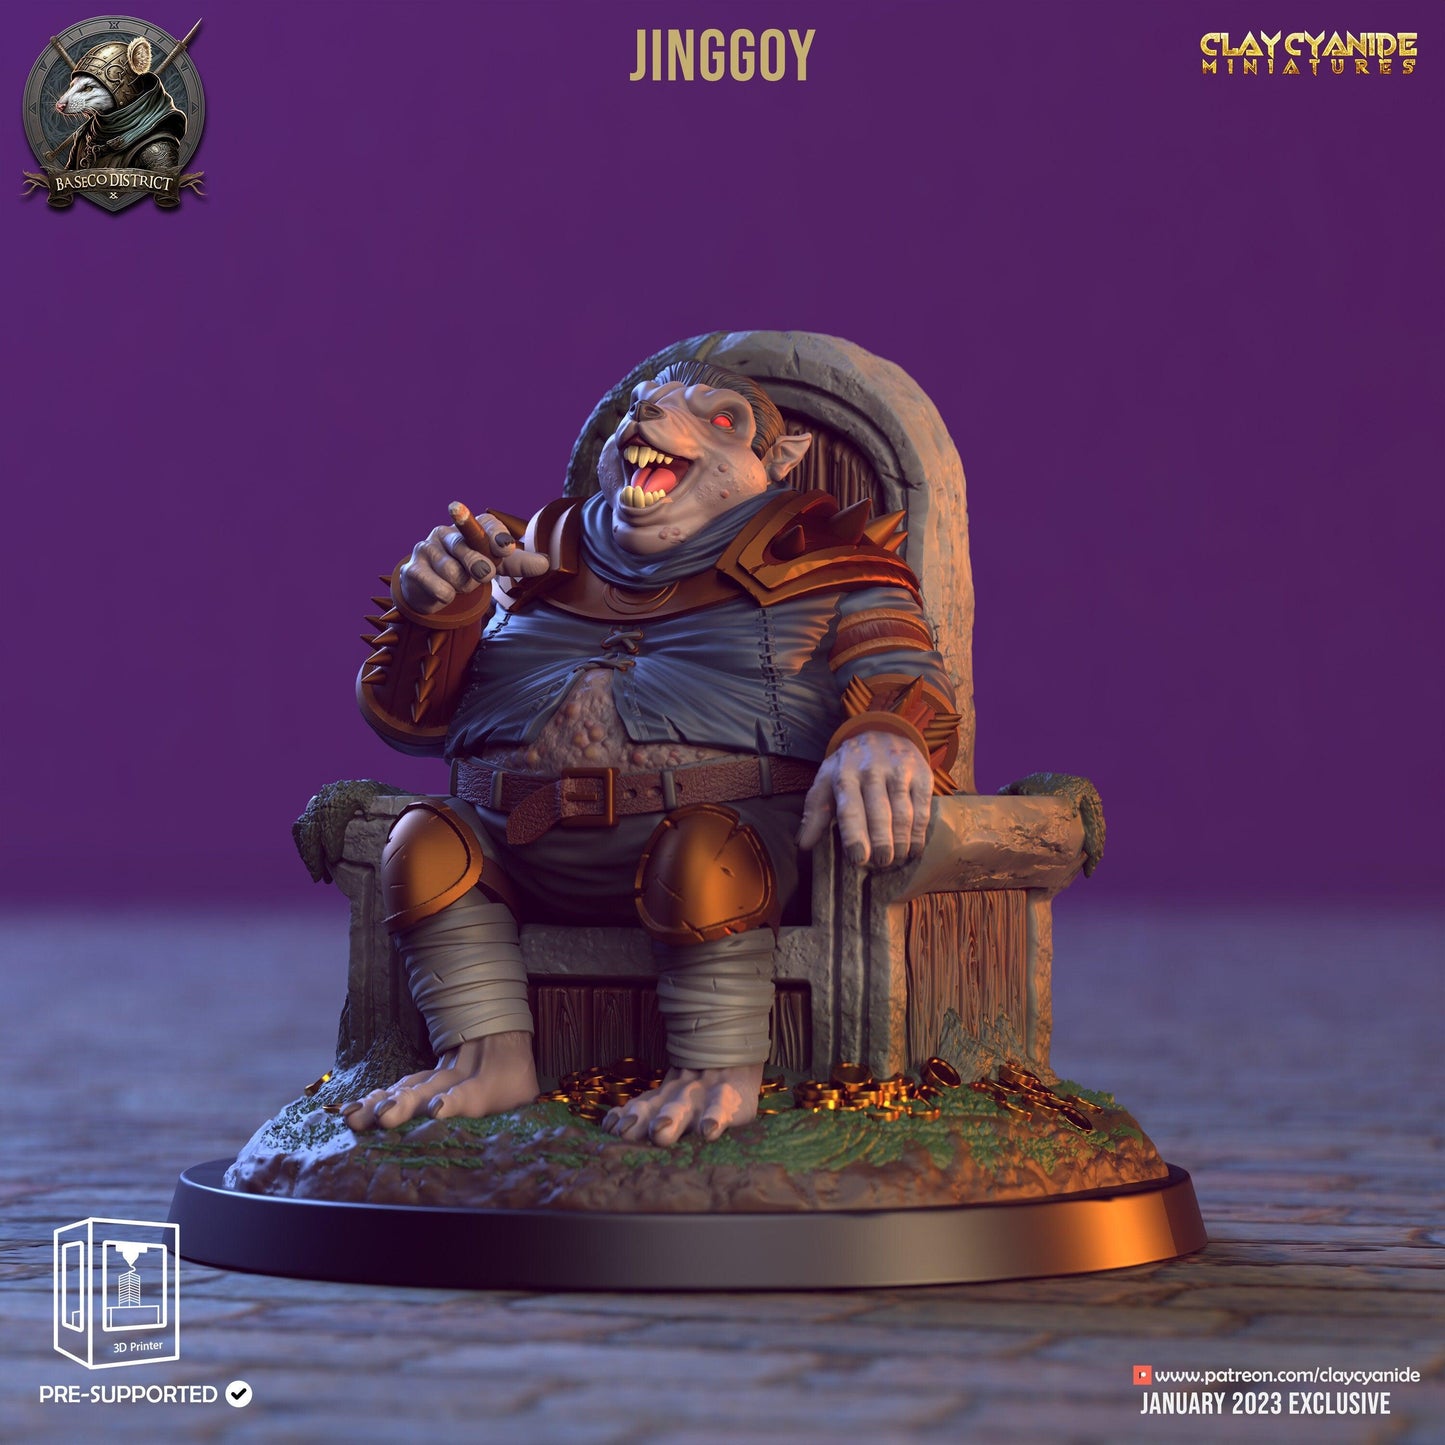 Jinggoy Rat King Ratmen miniature | Clay Cyanide | Baseco District | DnD skaven Miniature Dungeons and Dragons, DnD 5e mousefolk - Plague Miniatures shop for DnD Miniatures